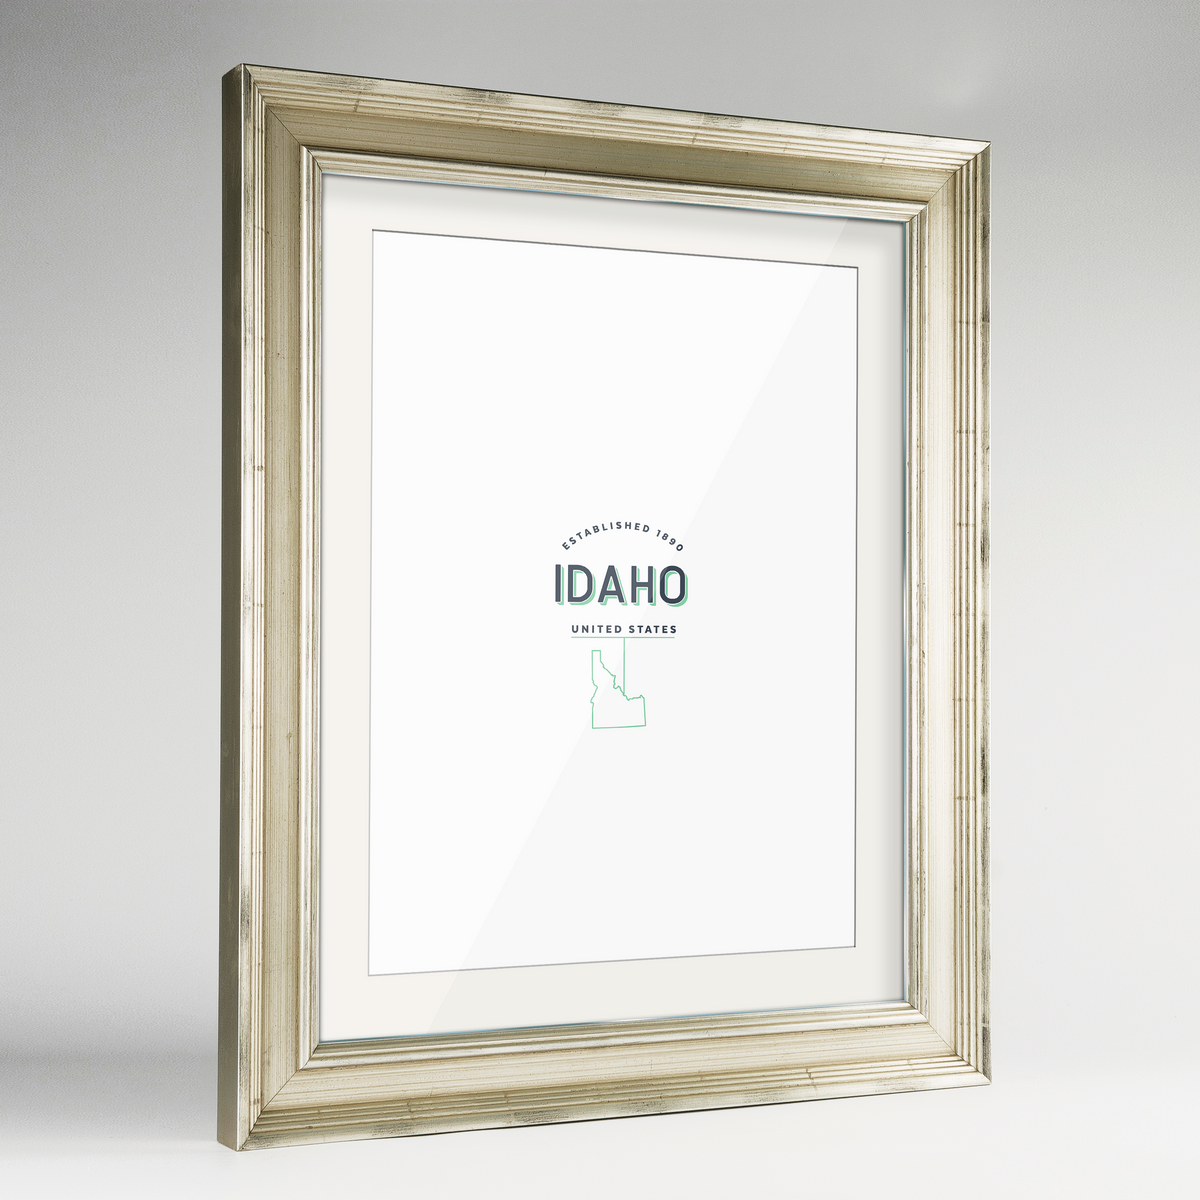 Idaho Word Art Frame Print - State Line